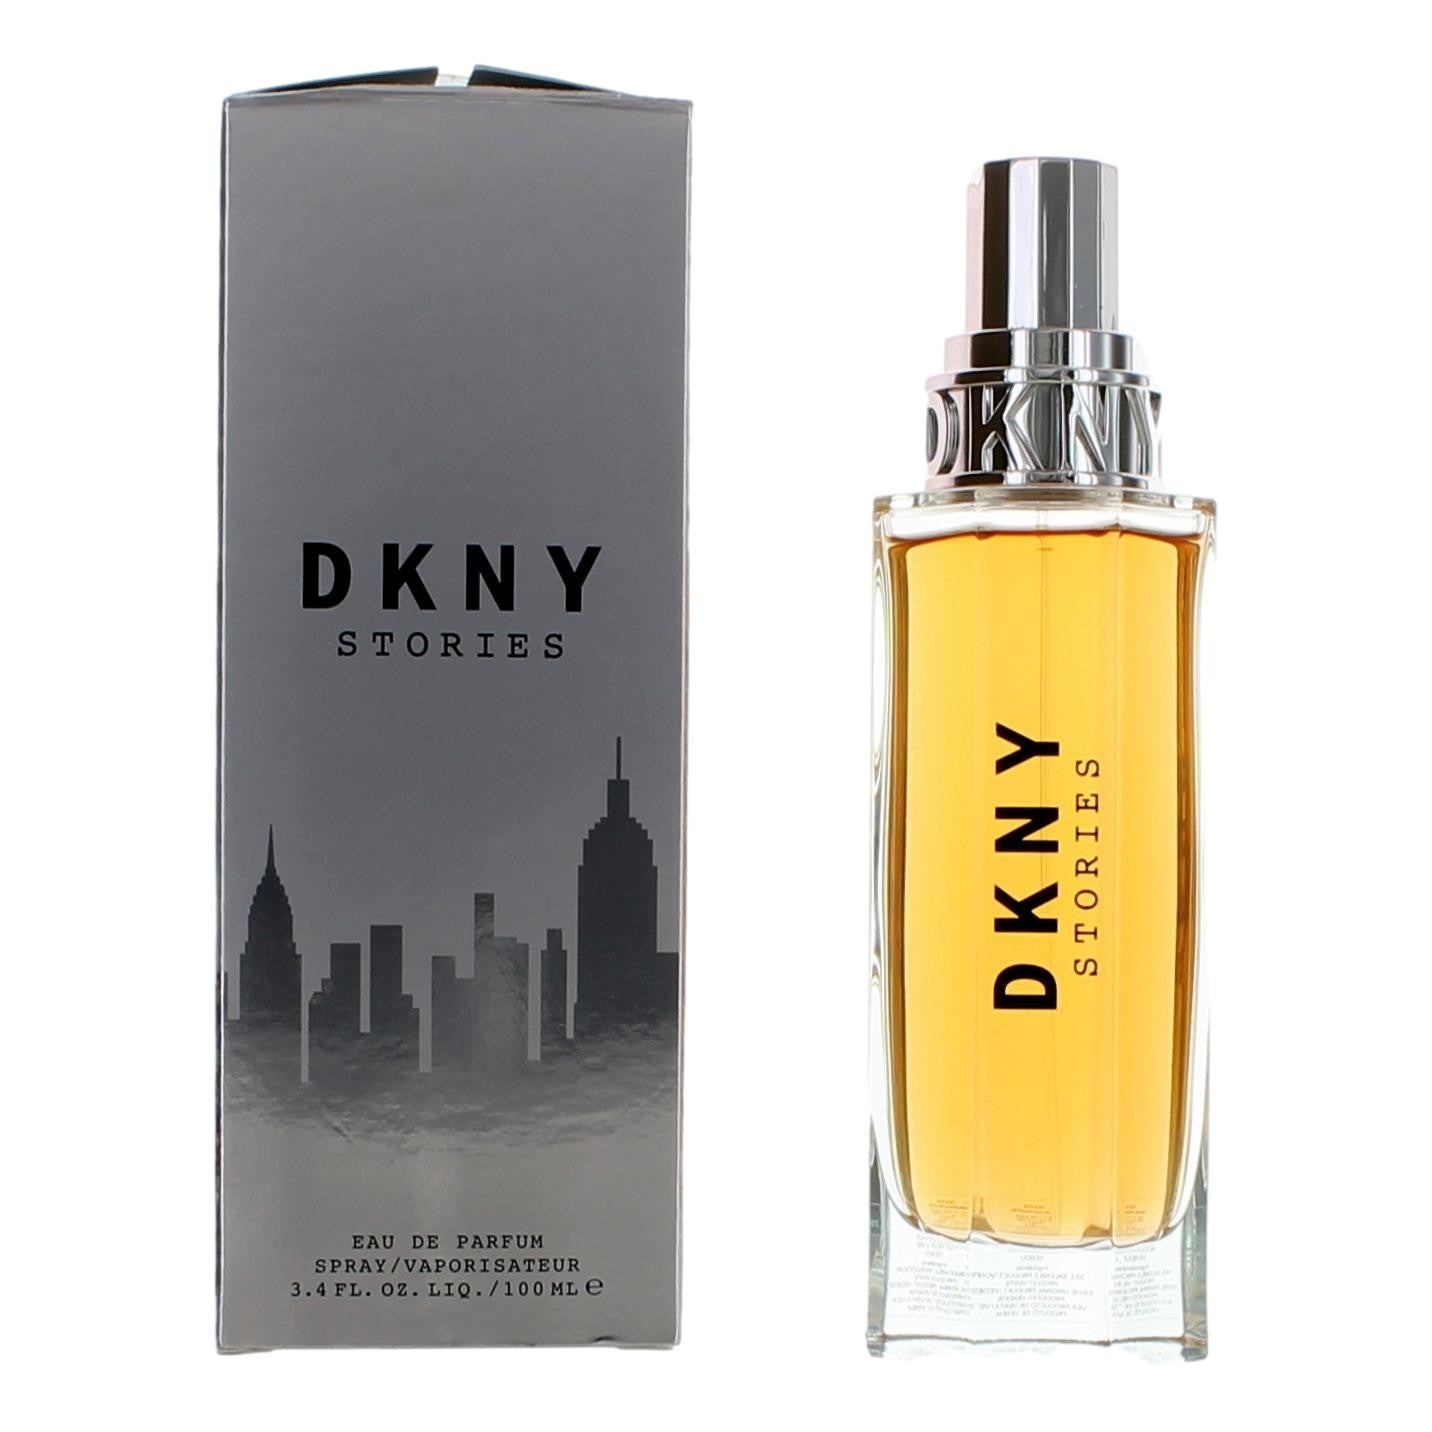 DKNY Stories by Donna Karan, 3.4 oz EDP Spray for Women Tester